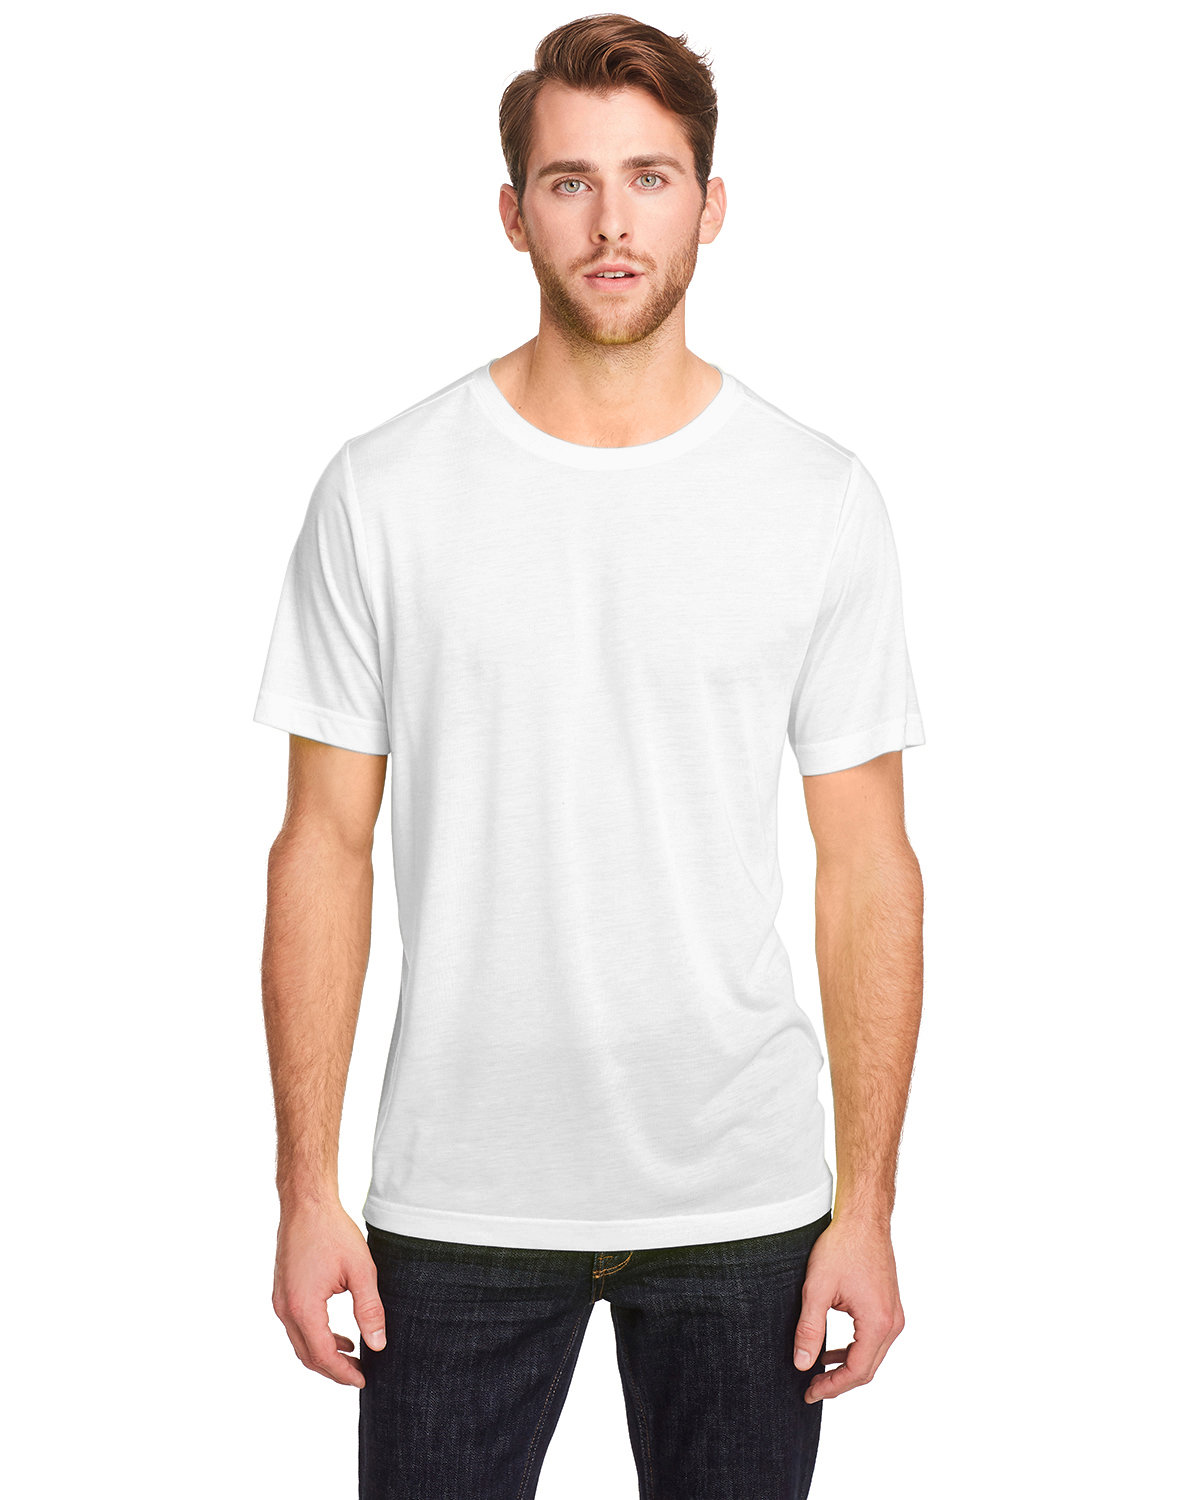 Core365 Adult Fusion ChromaSoft Performance T-Shirt WHITE 